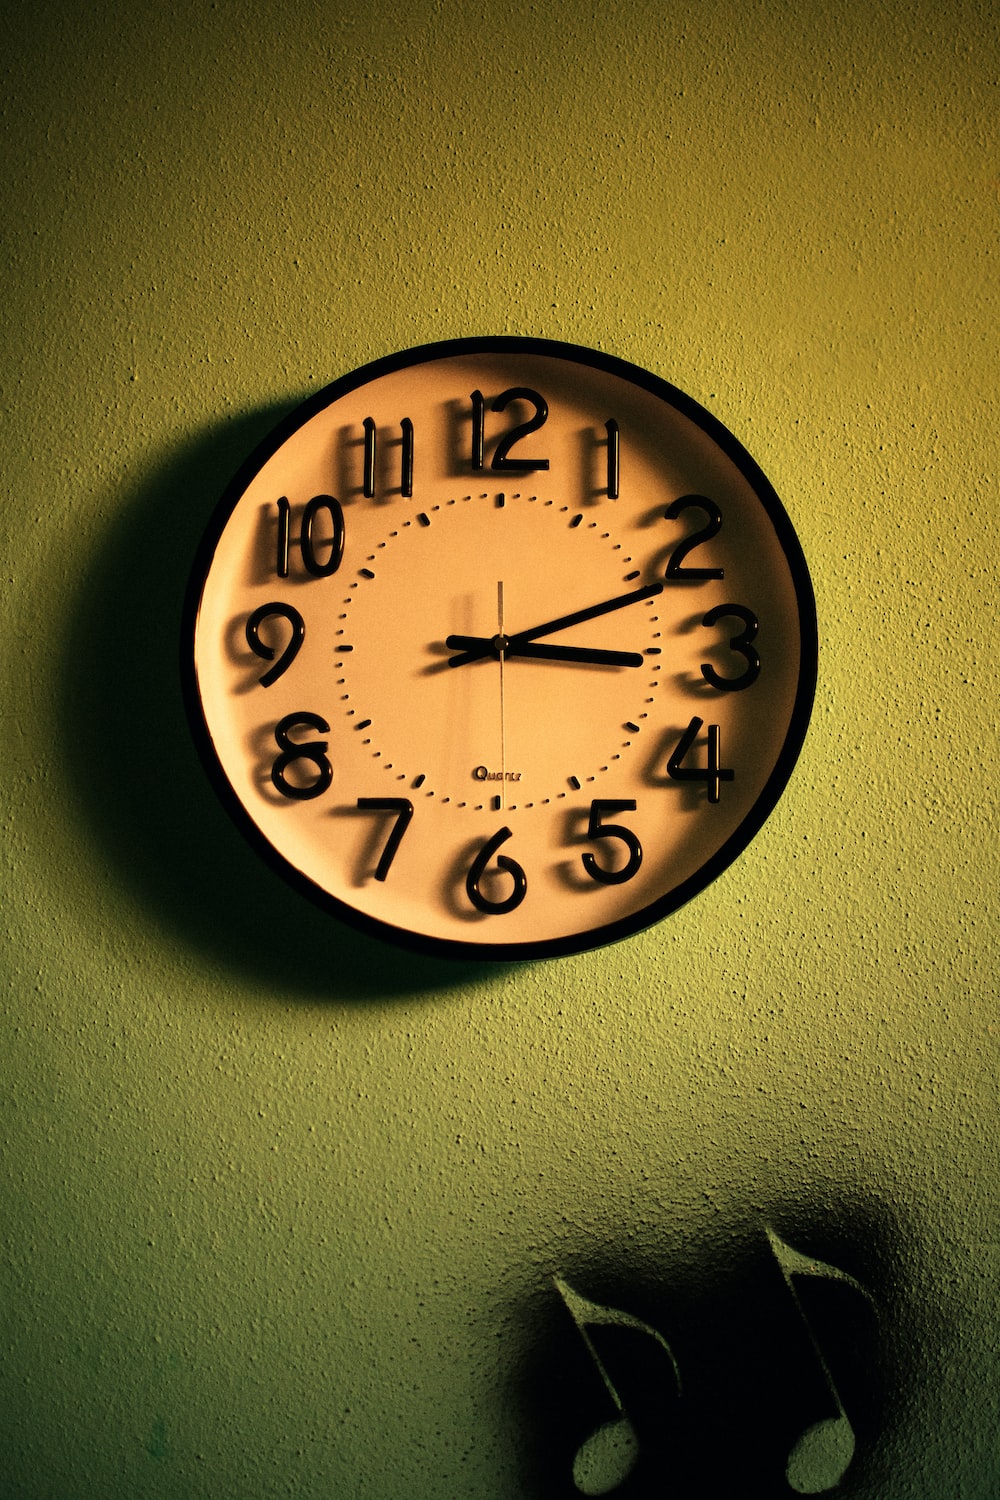 Analog Clock Picture. Download Free Image